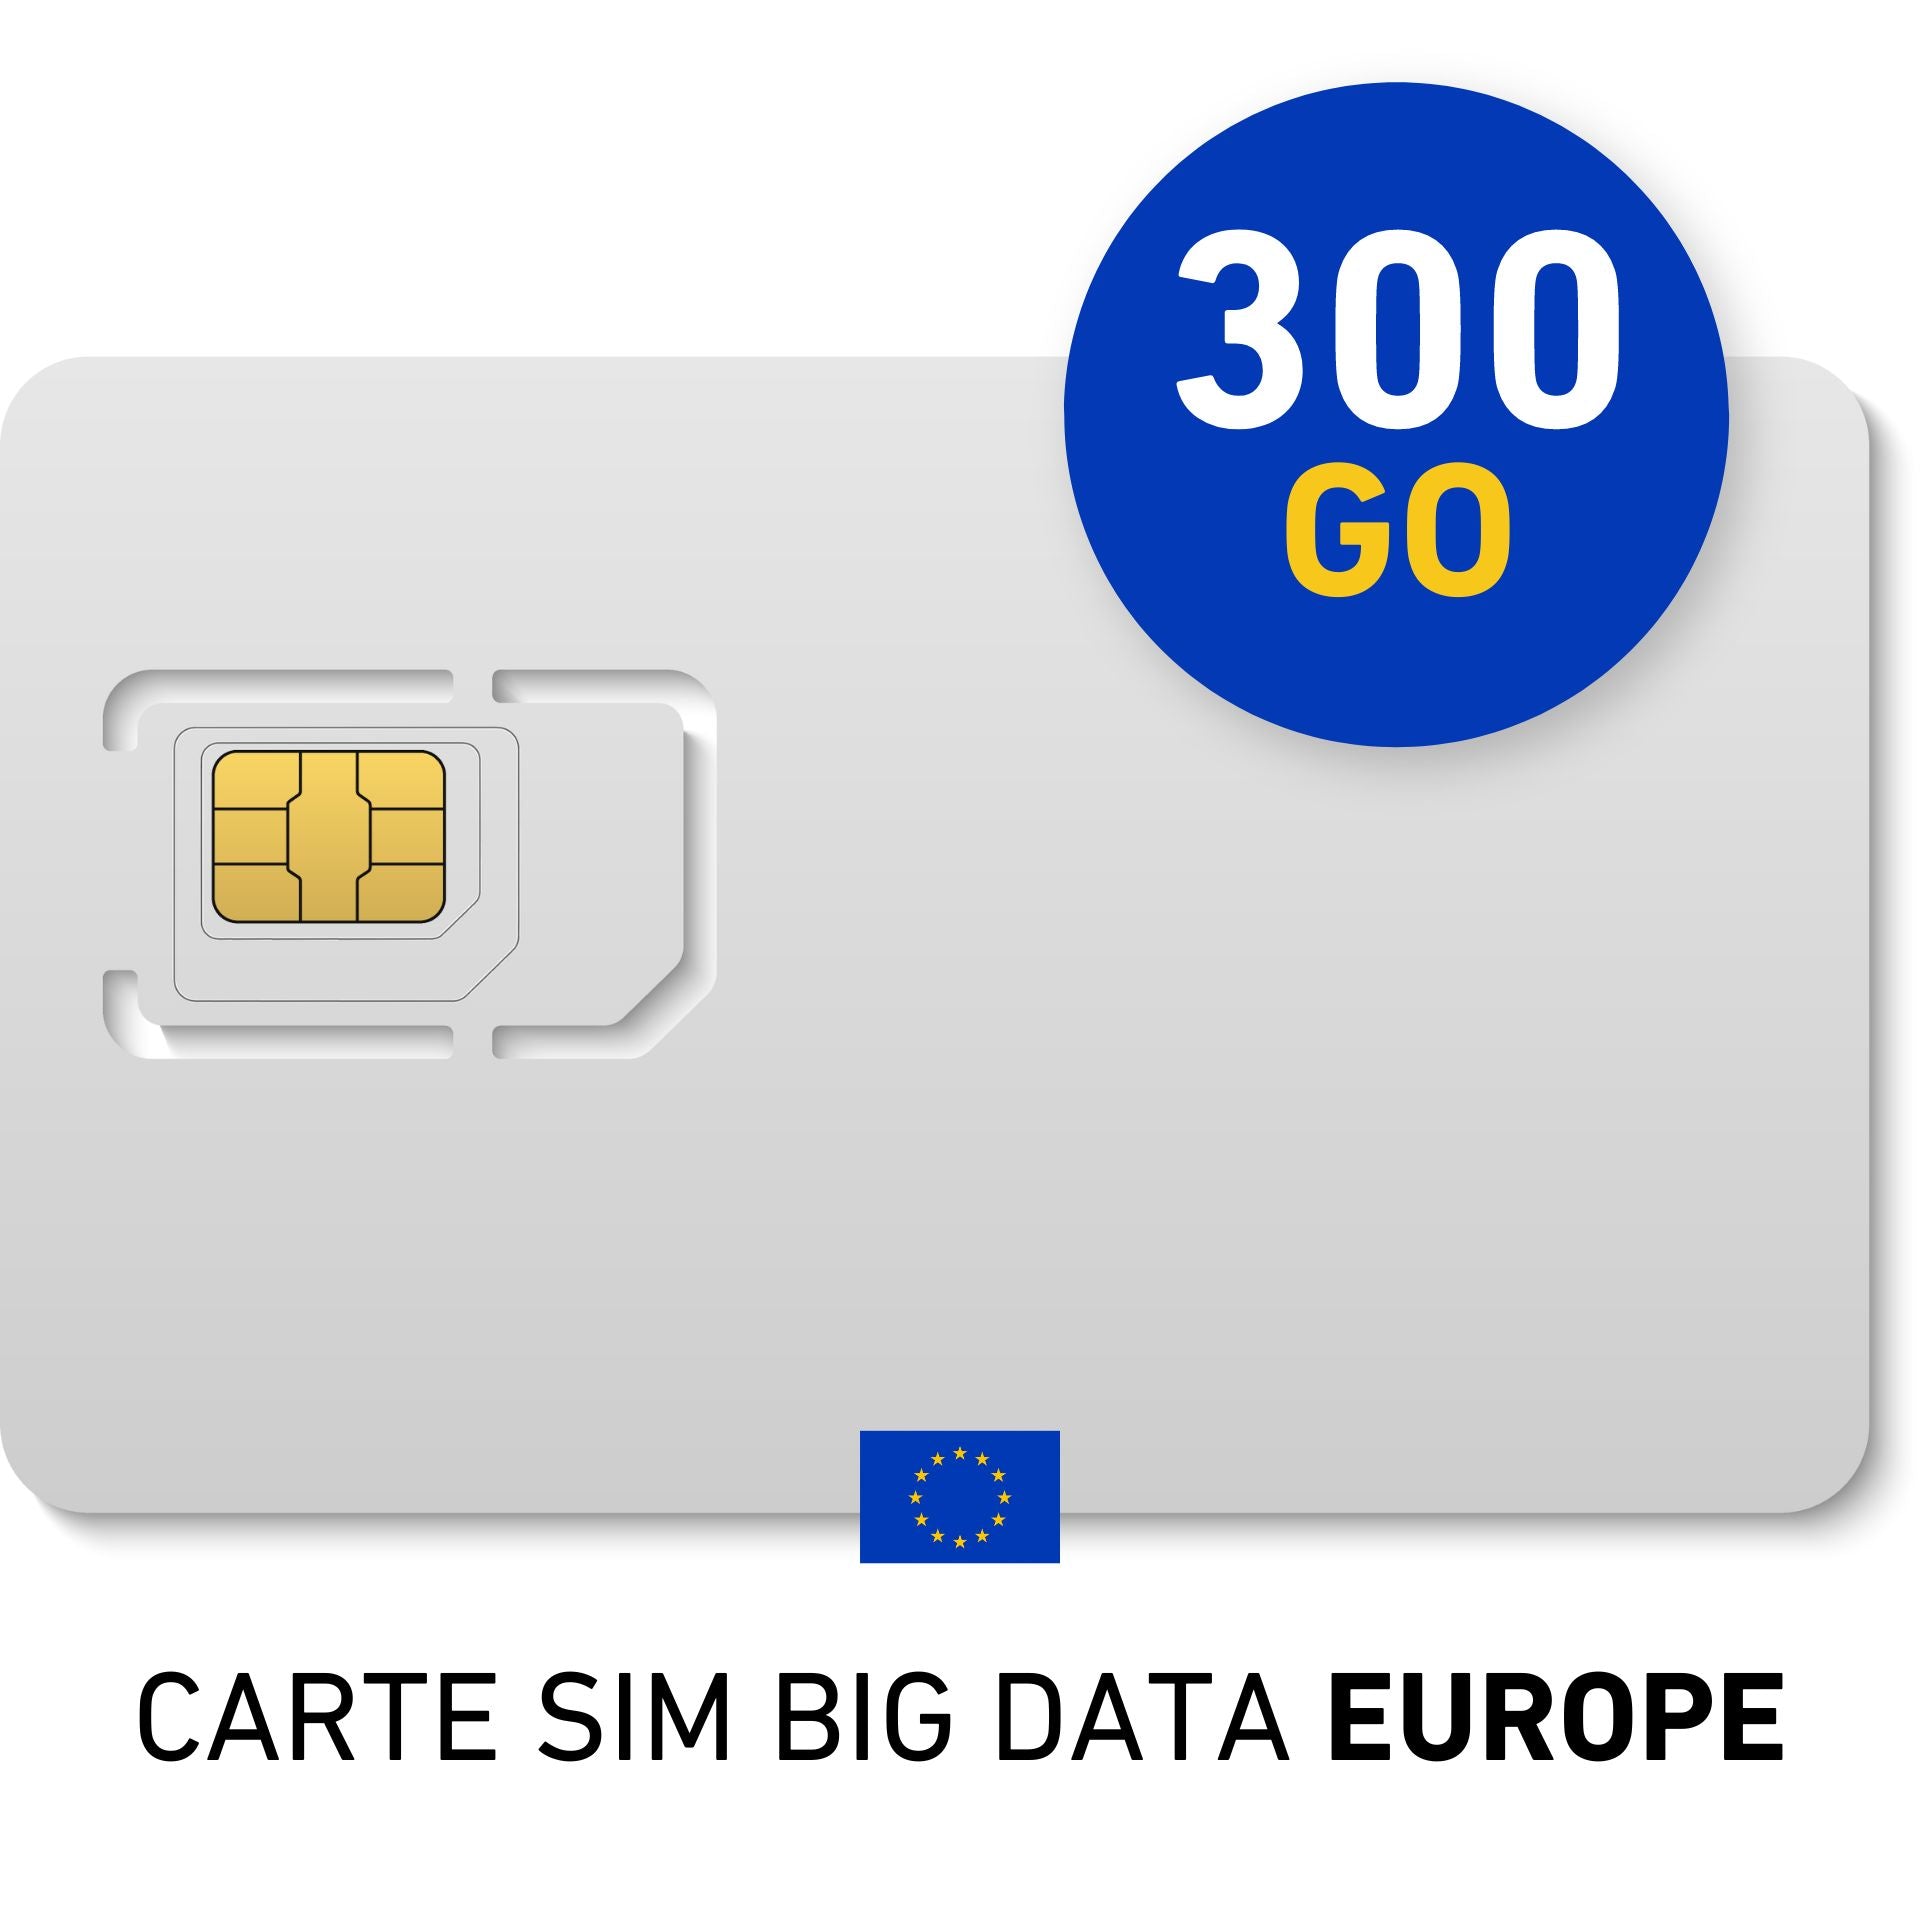 Abono mensual TARJETA SIM Grandes Datos Europa 300Go